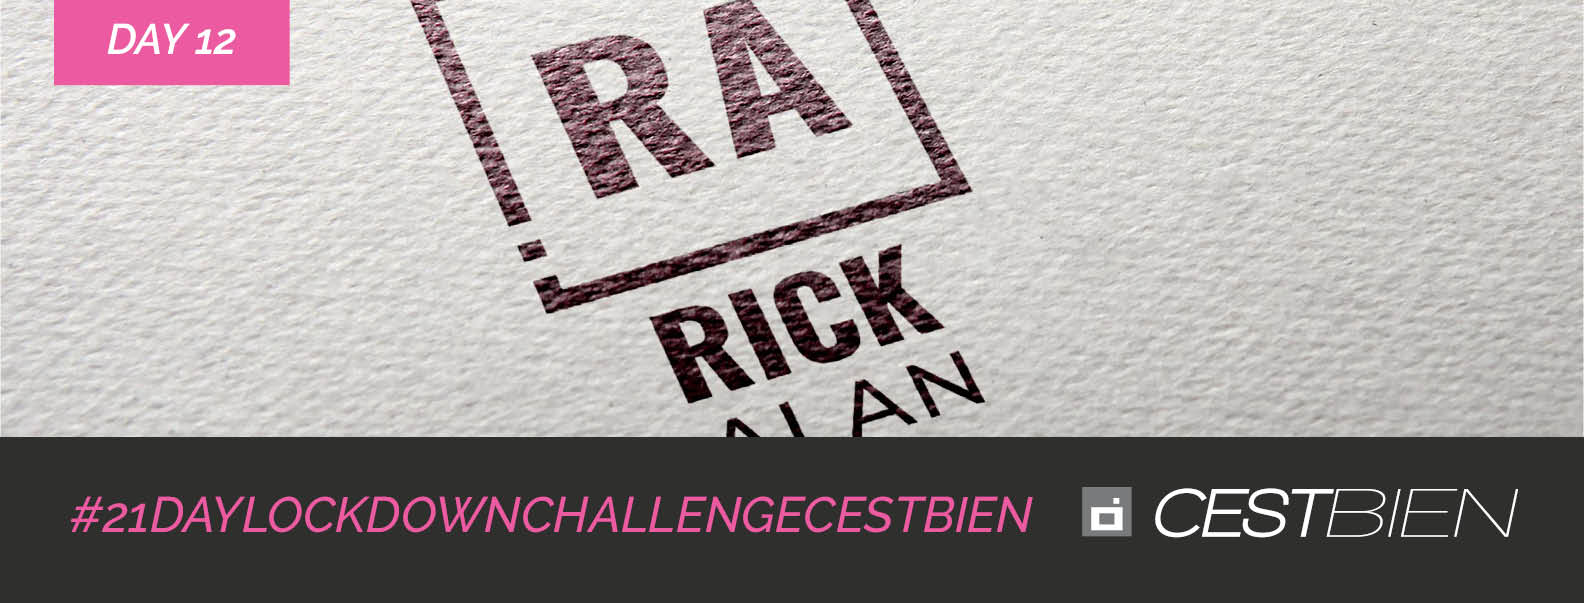 Lockdown Day12 – Client: Rick Alan